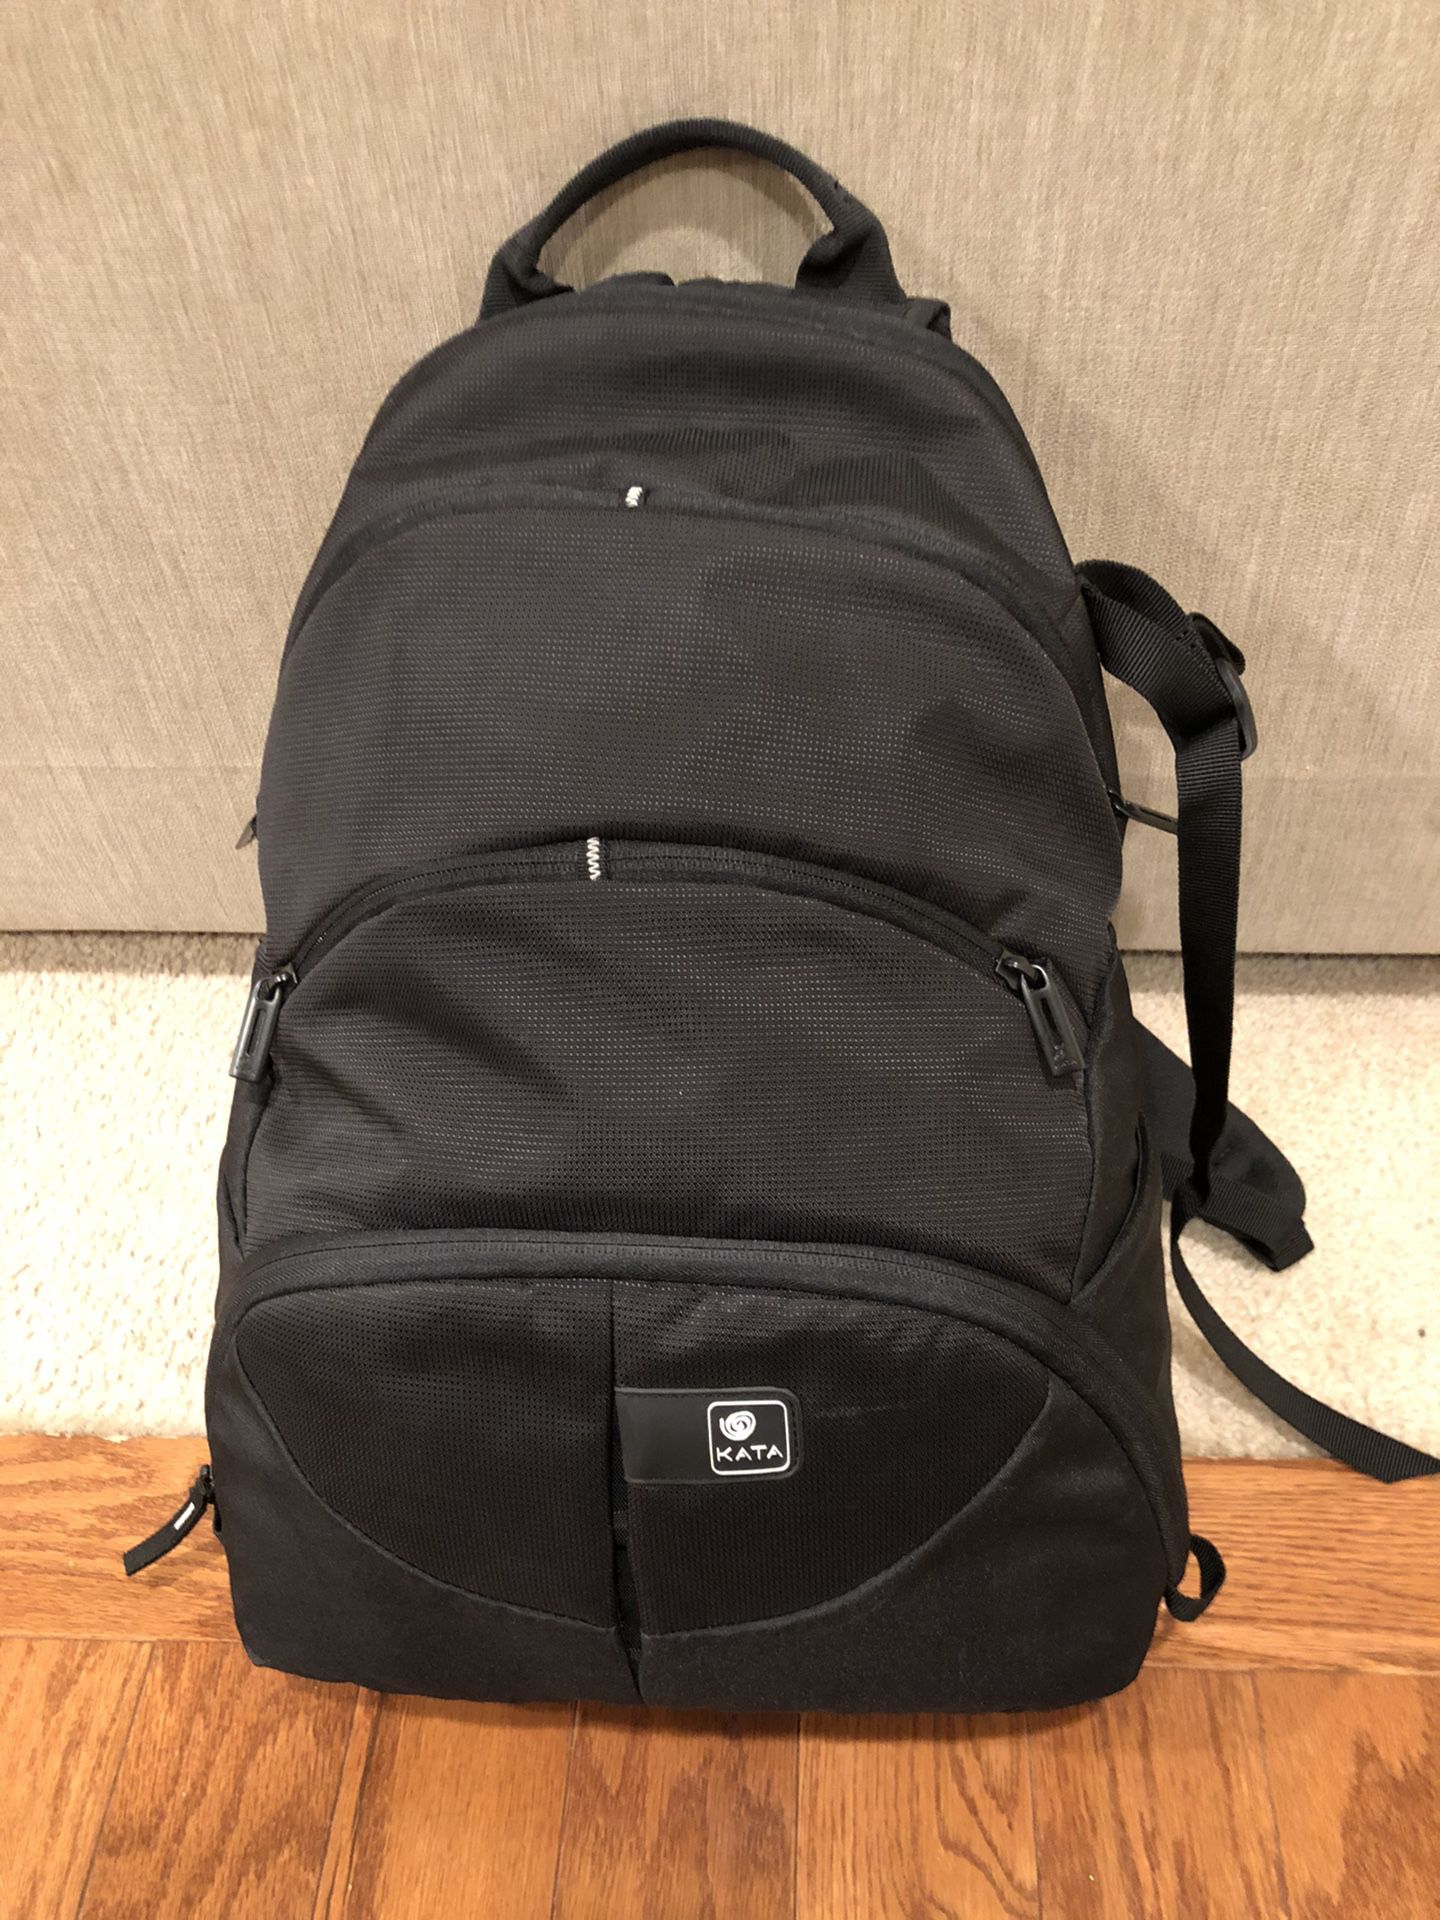 Kata Camera Backpack